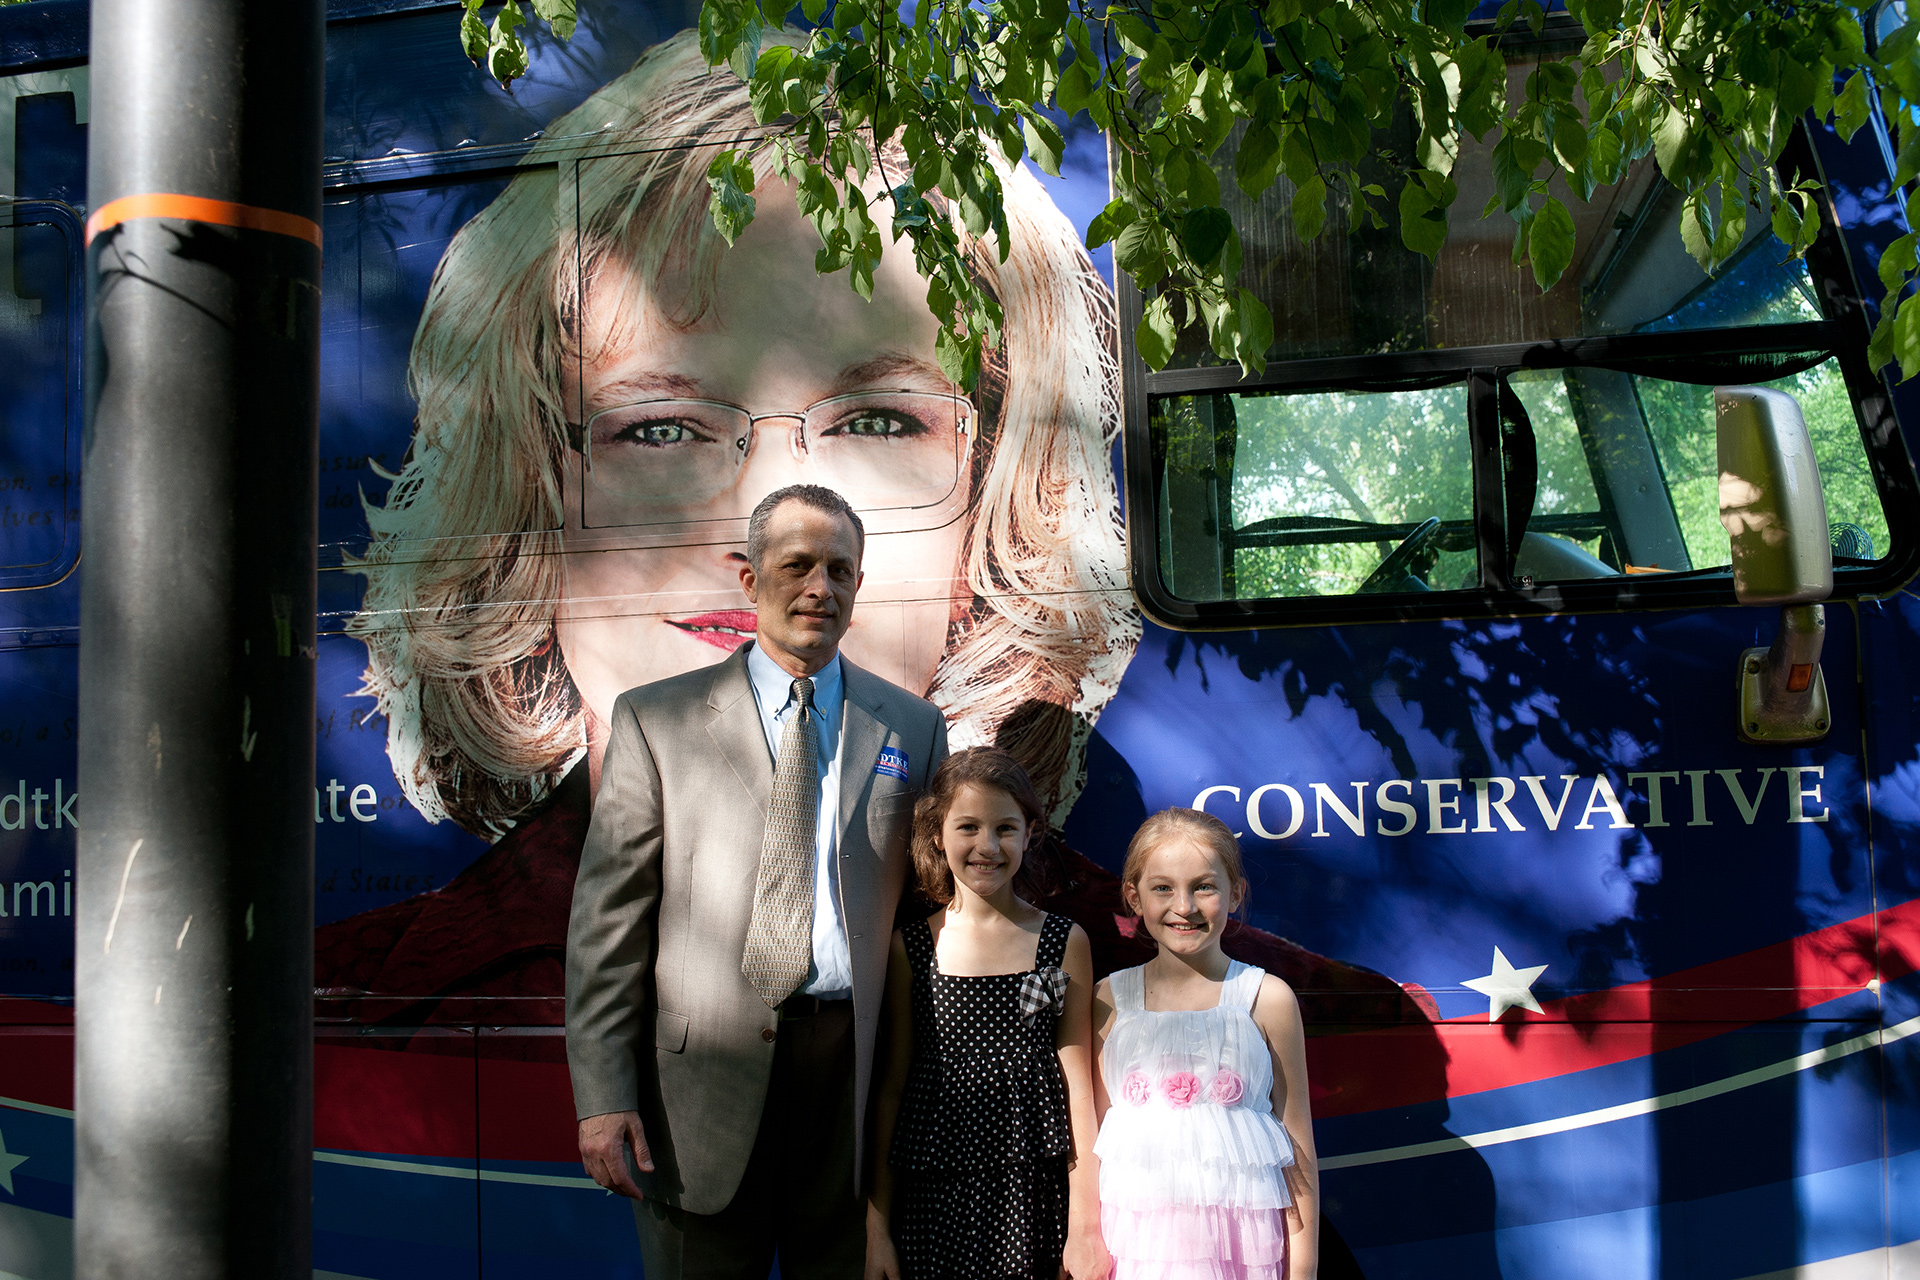 The family of Jamie Radtke, U.S. Senate candidate, 2012